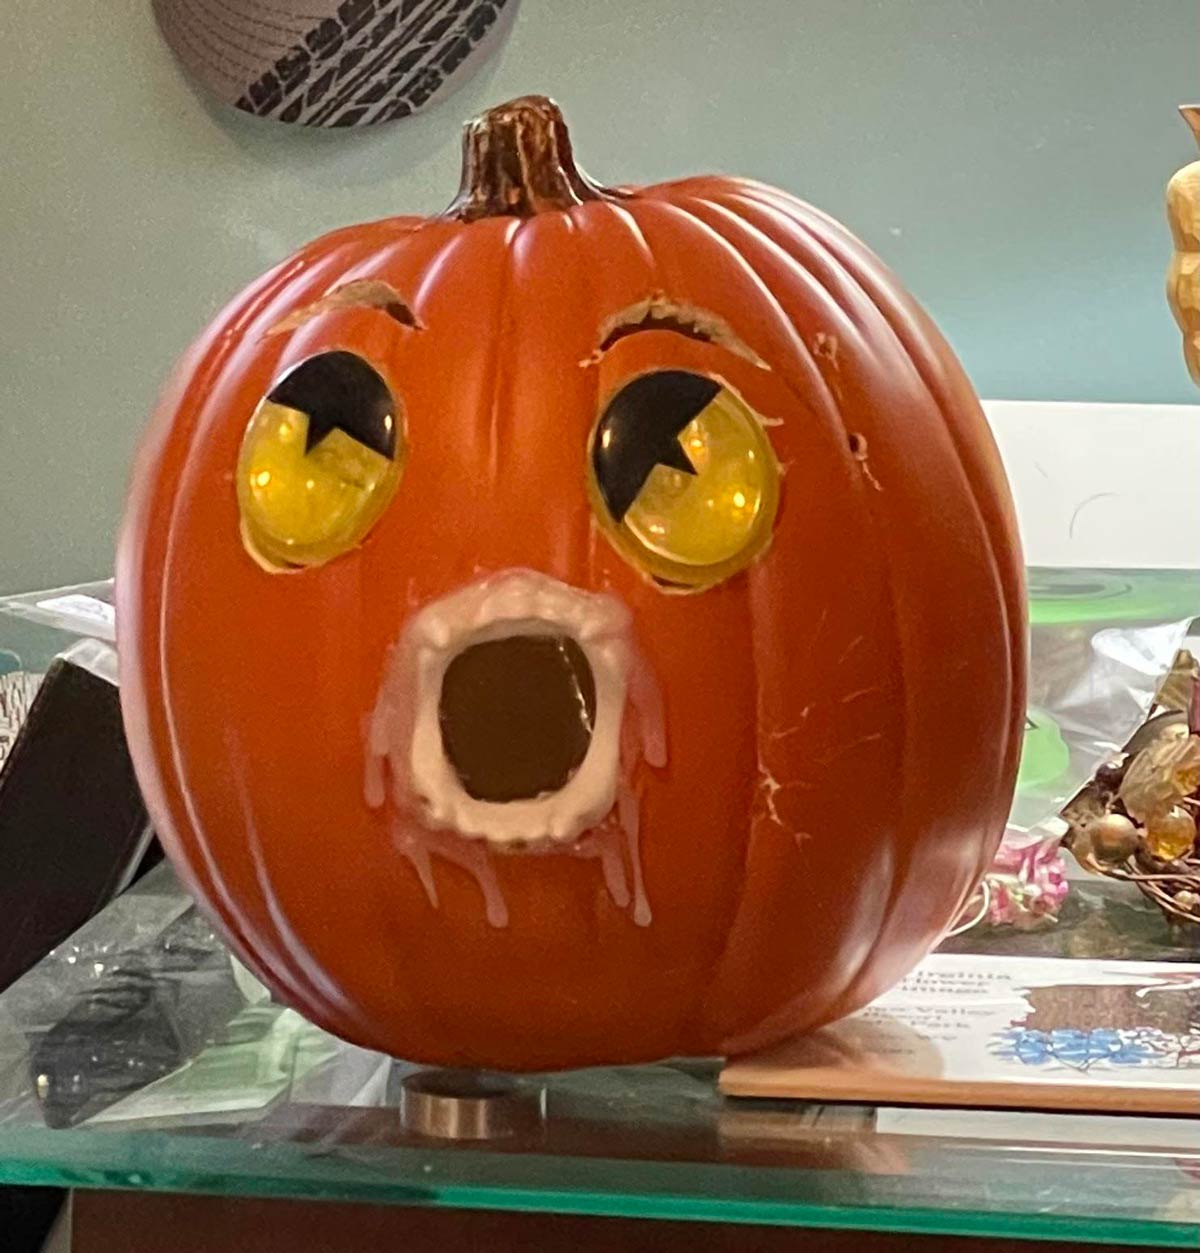 My friend’s mom tried to glue vampire teeth on a pumpkin